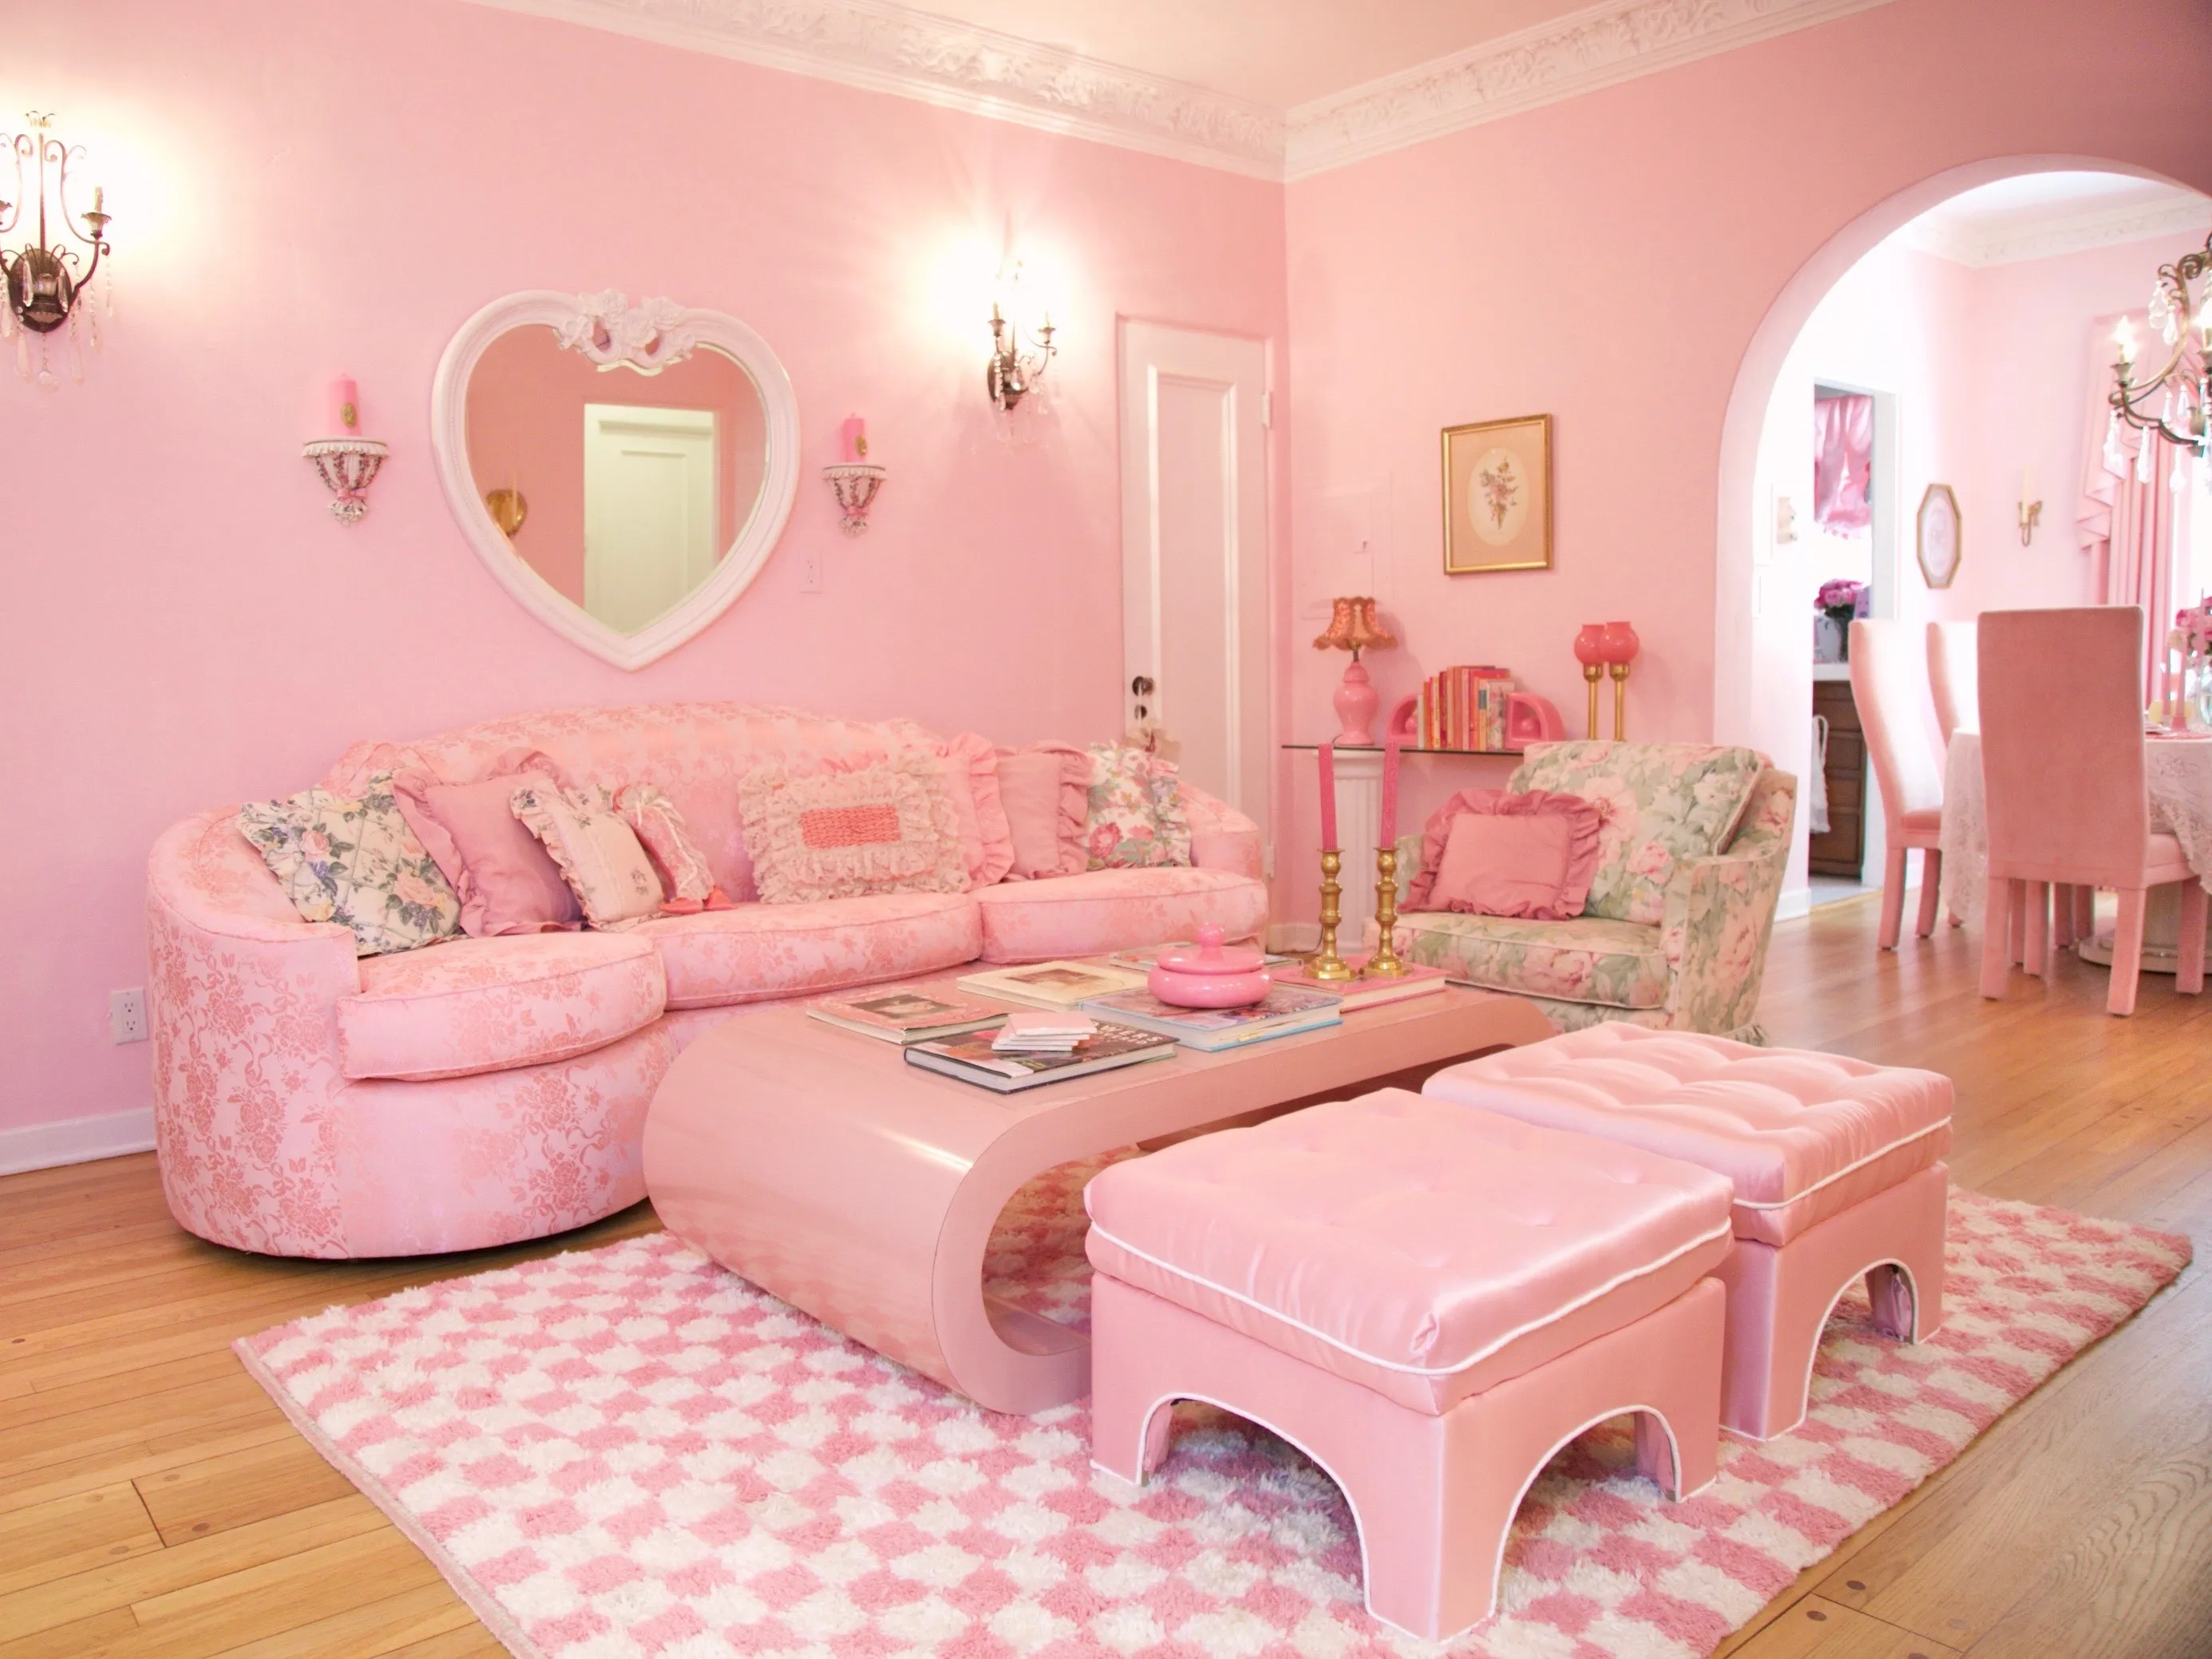 sala de estar em tom de rosa